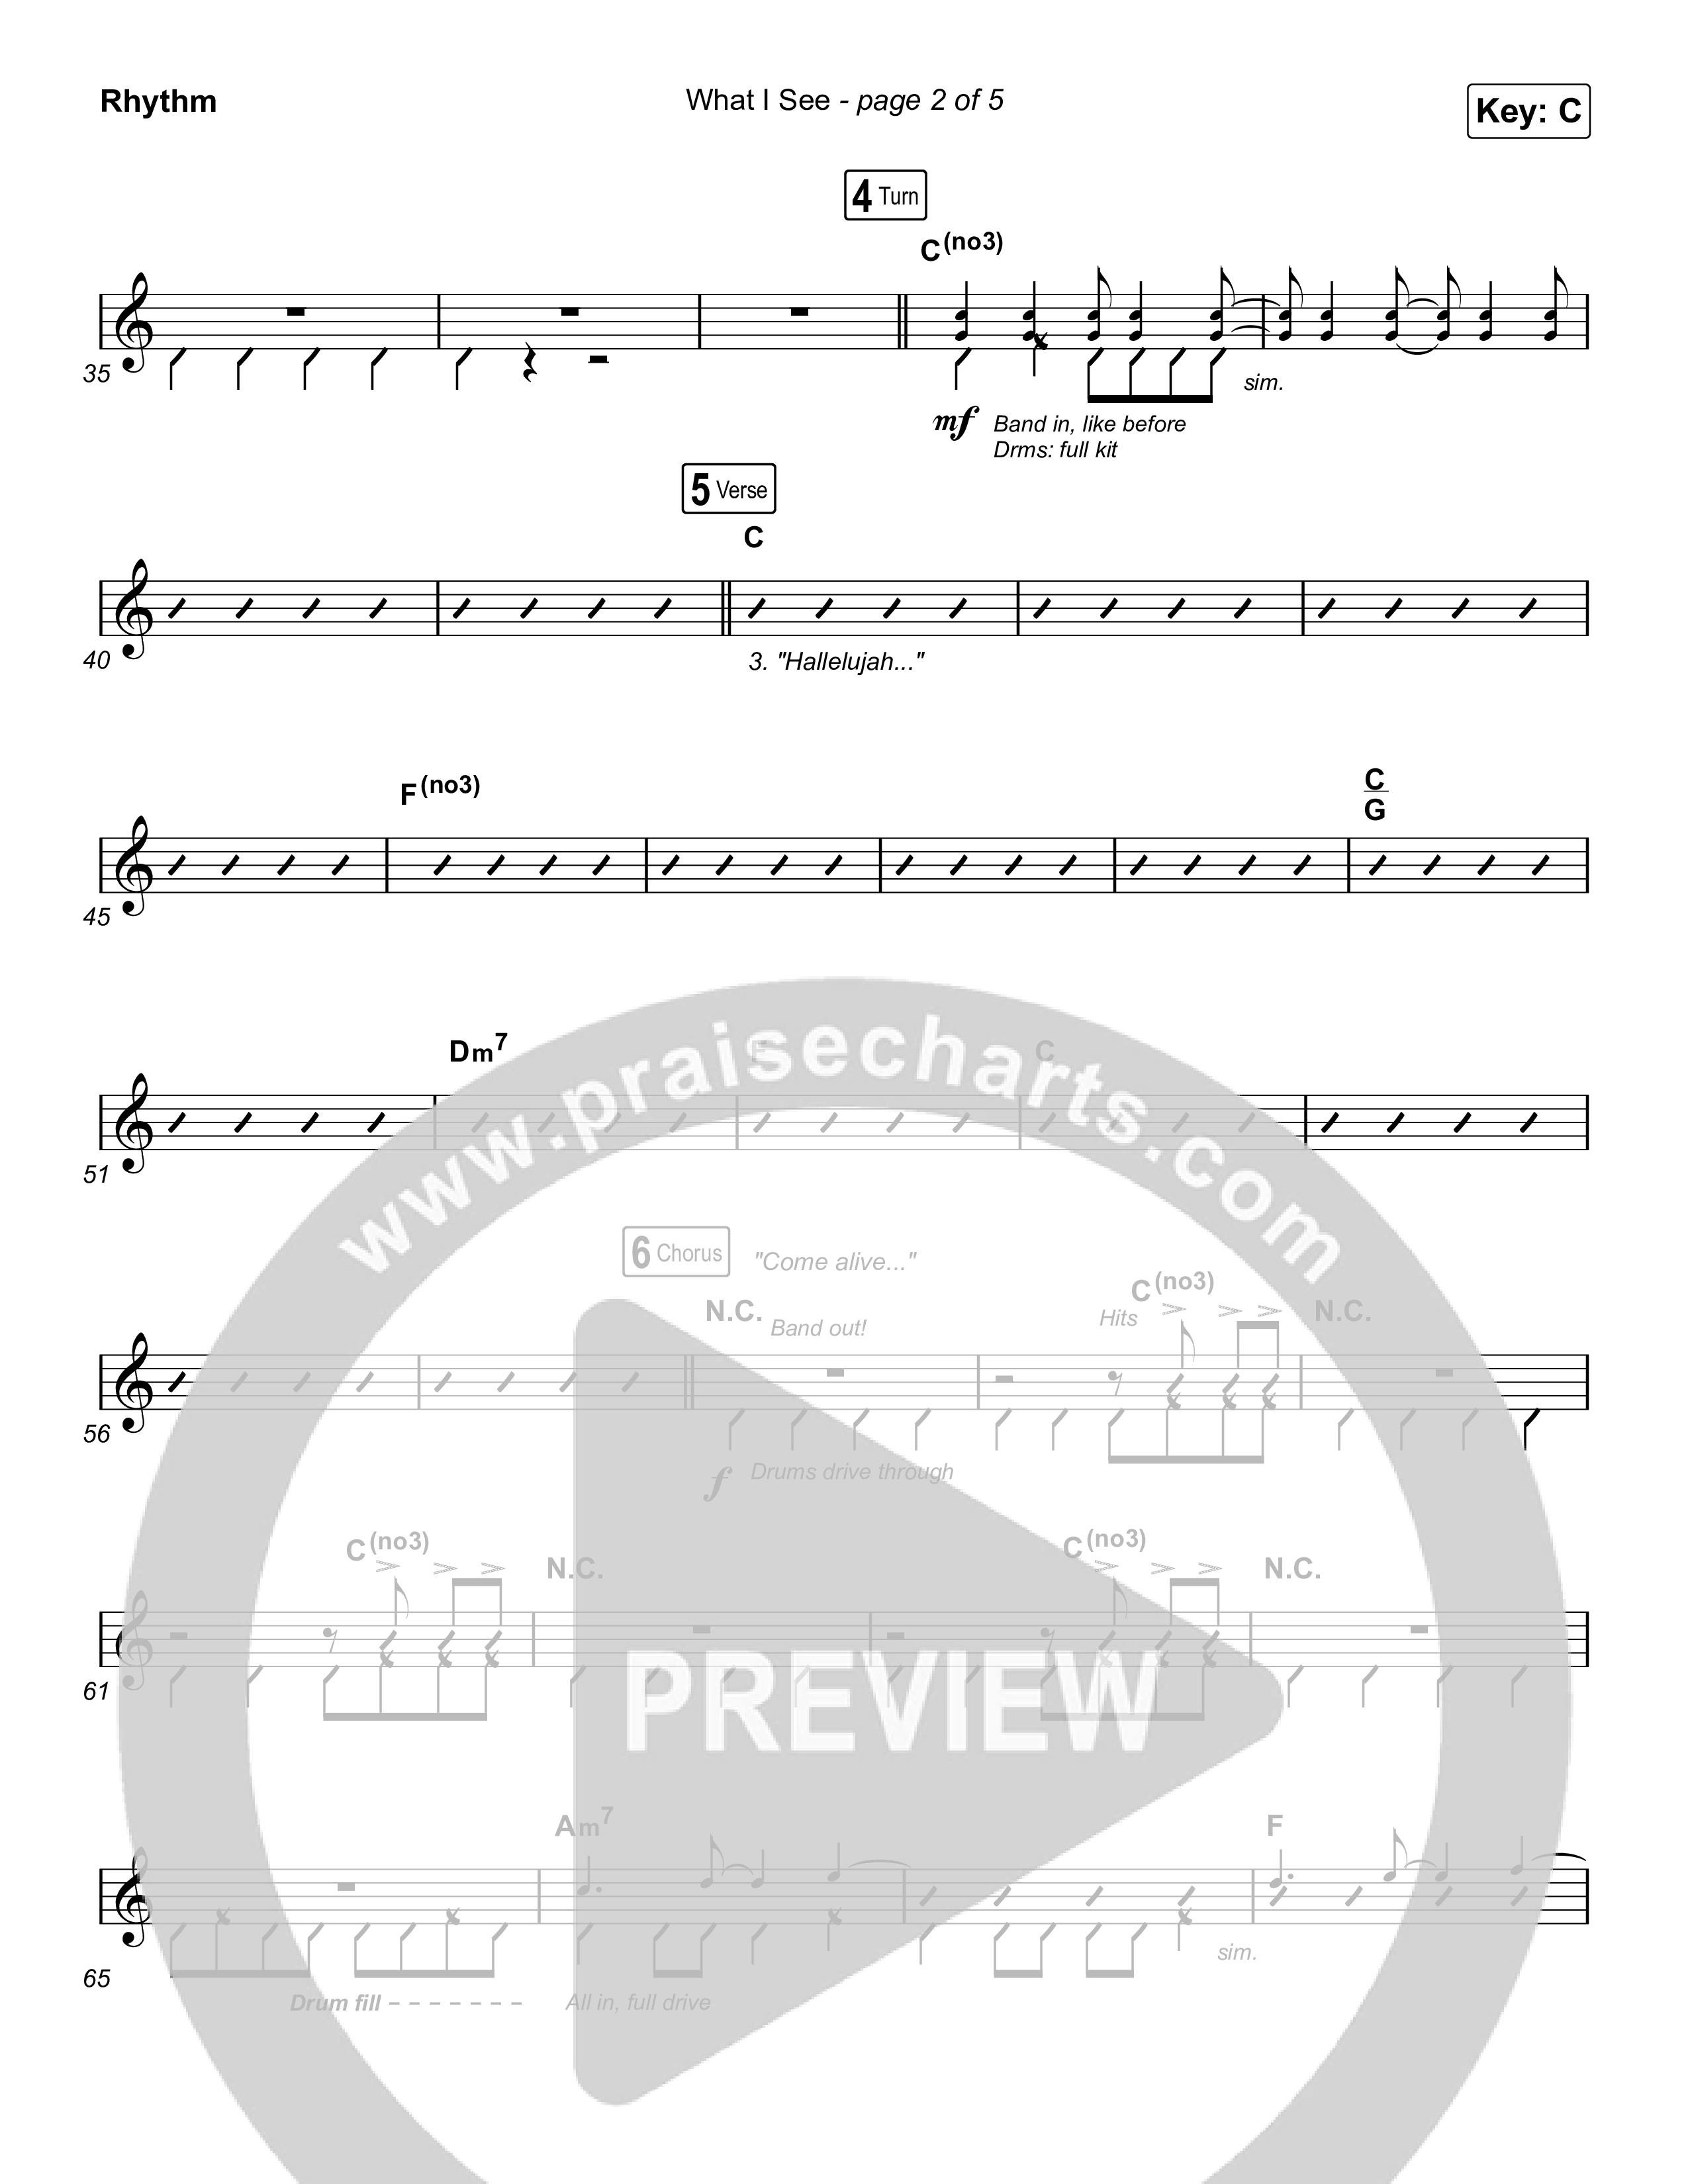 What I See (Choral Anthem SATB) Rhythm Pack (Elevation Worship / Arr. Mason Brown)